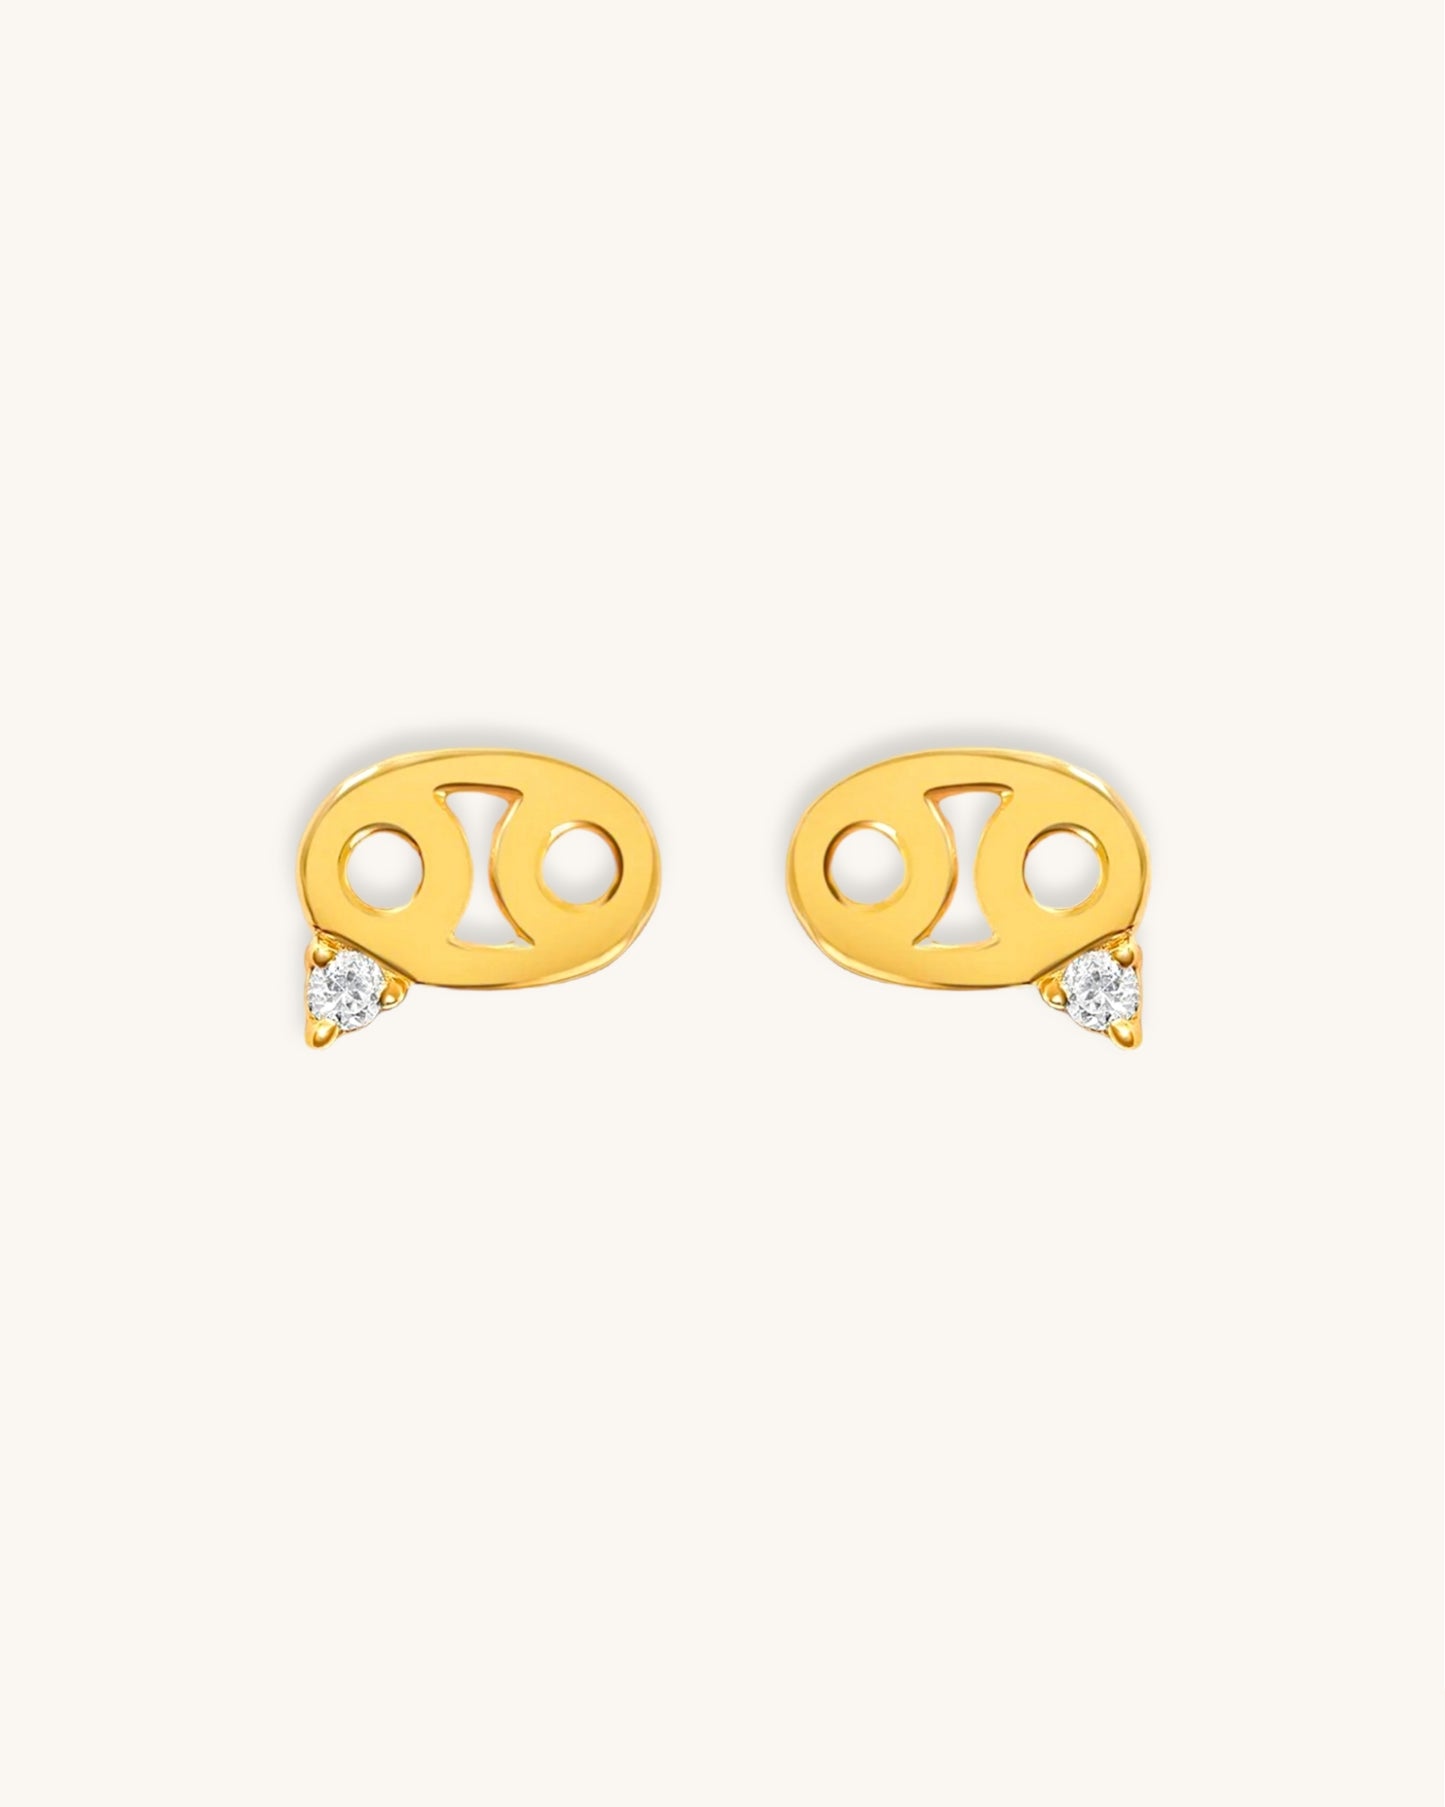 Starry Zodiac Sign Earrings · Cancer